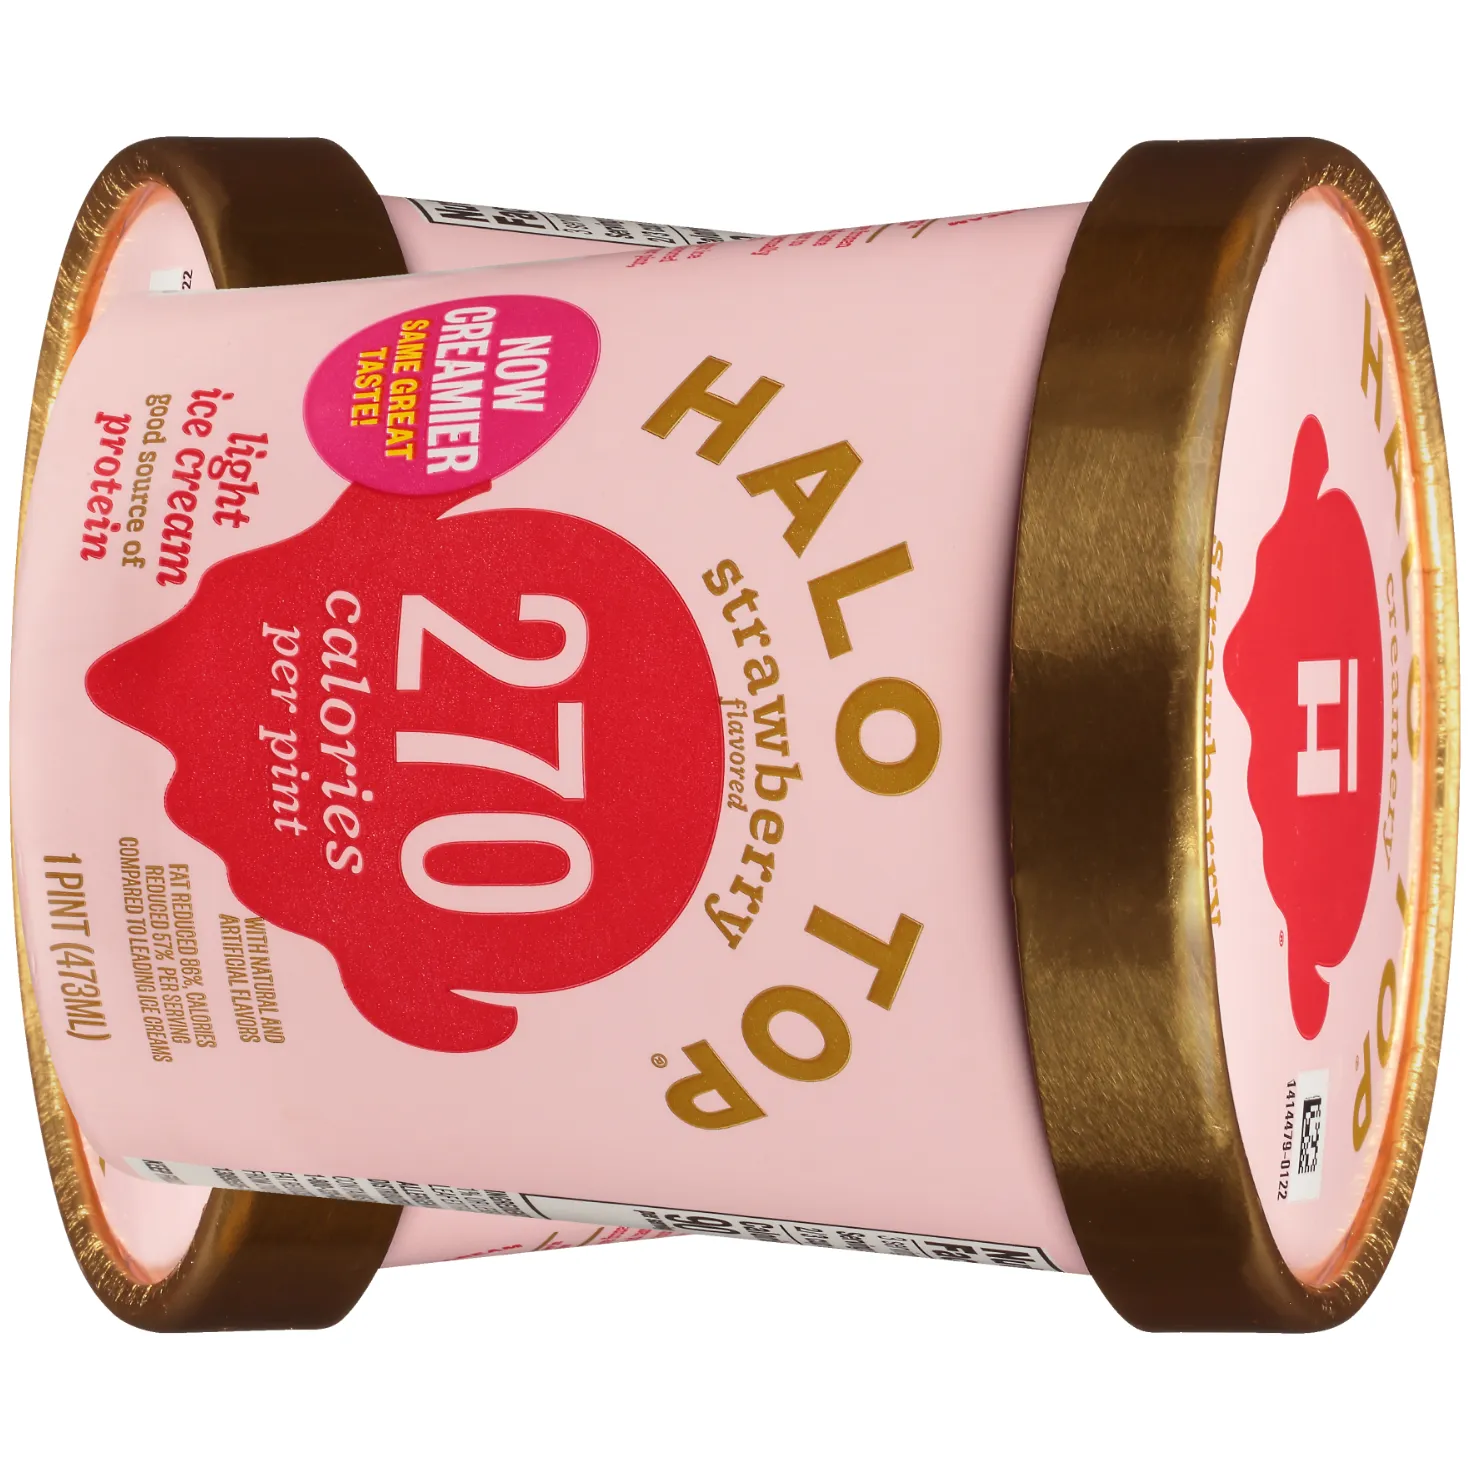 Free Halo Top Light Ice-Cream